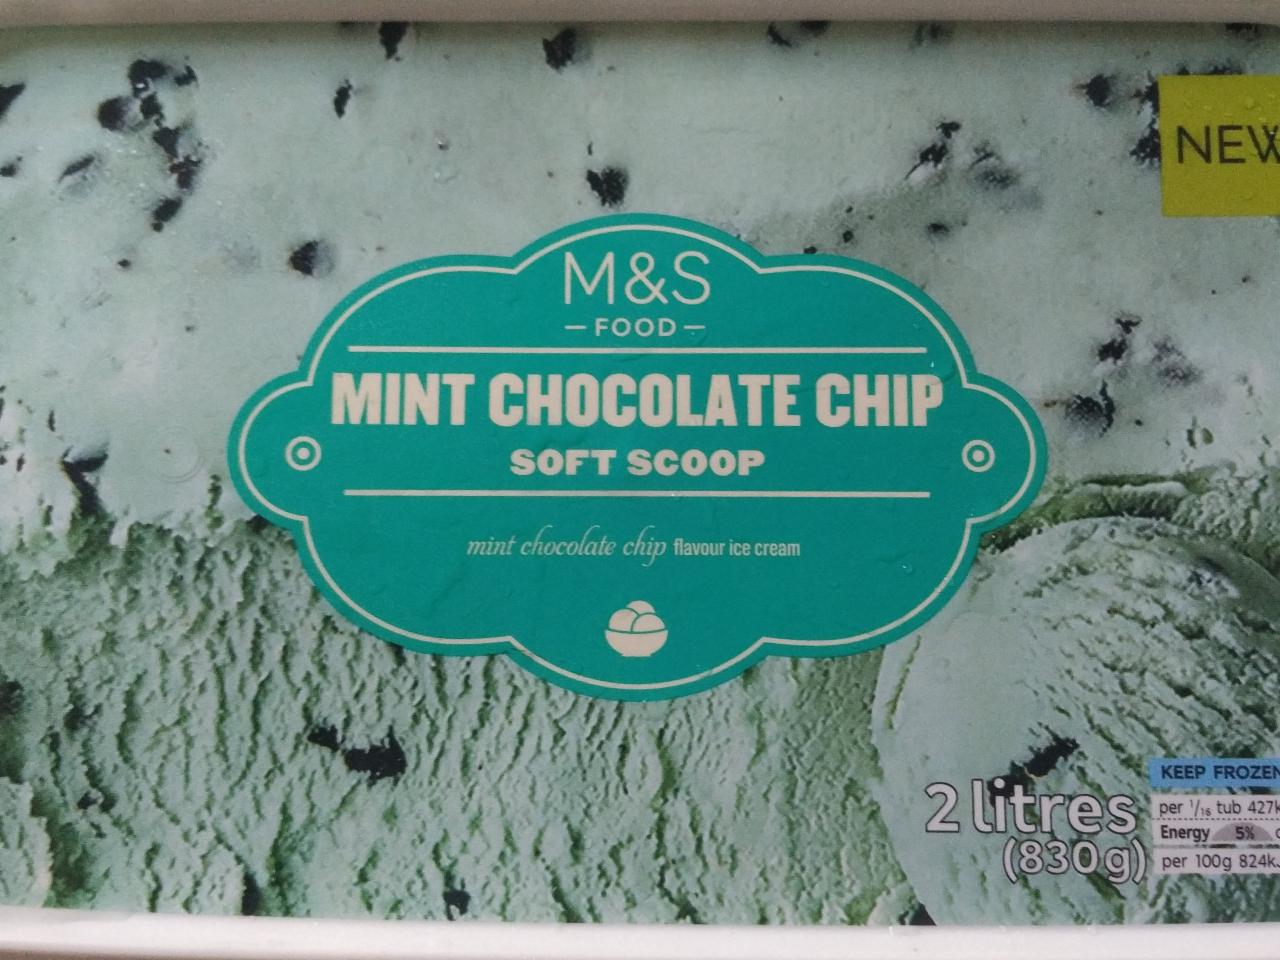 Fotografie - Mint chocolate chip M&S Food